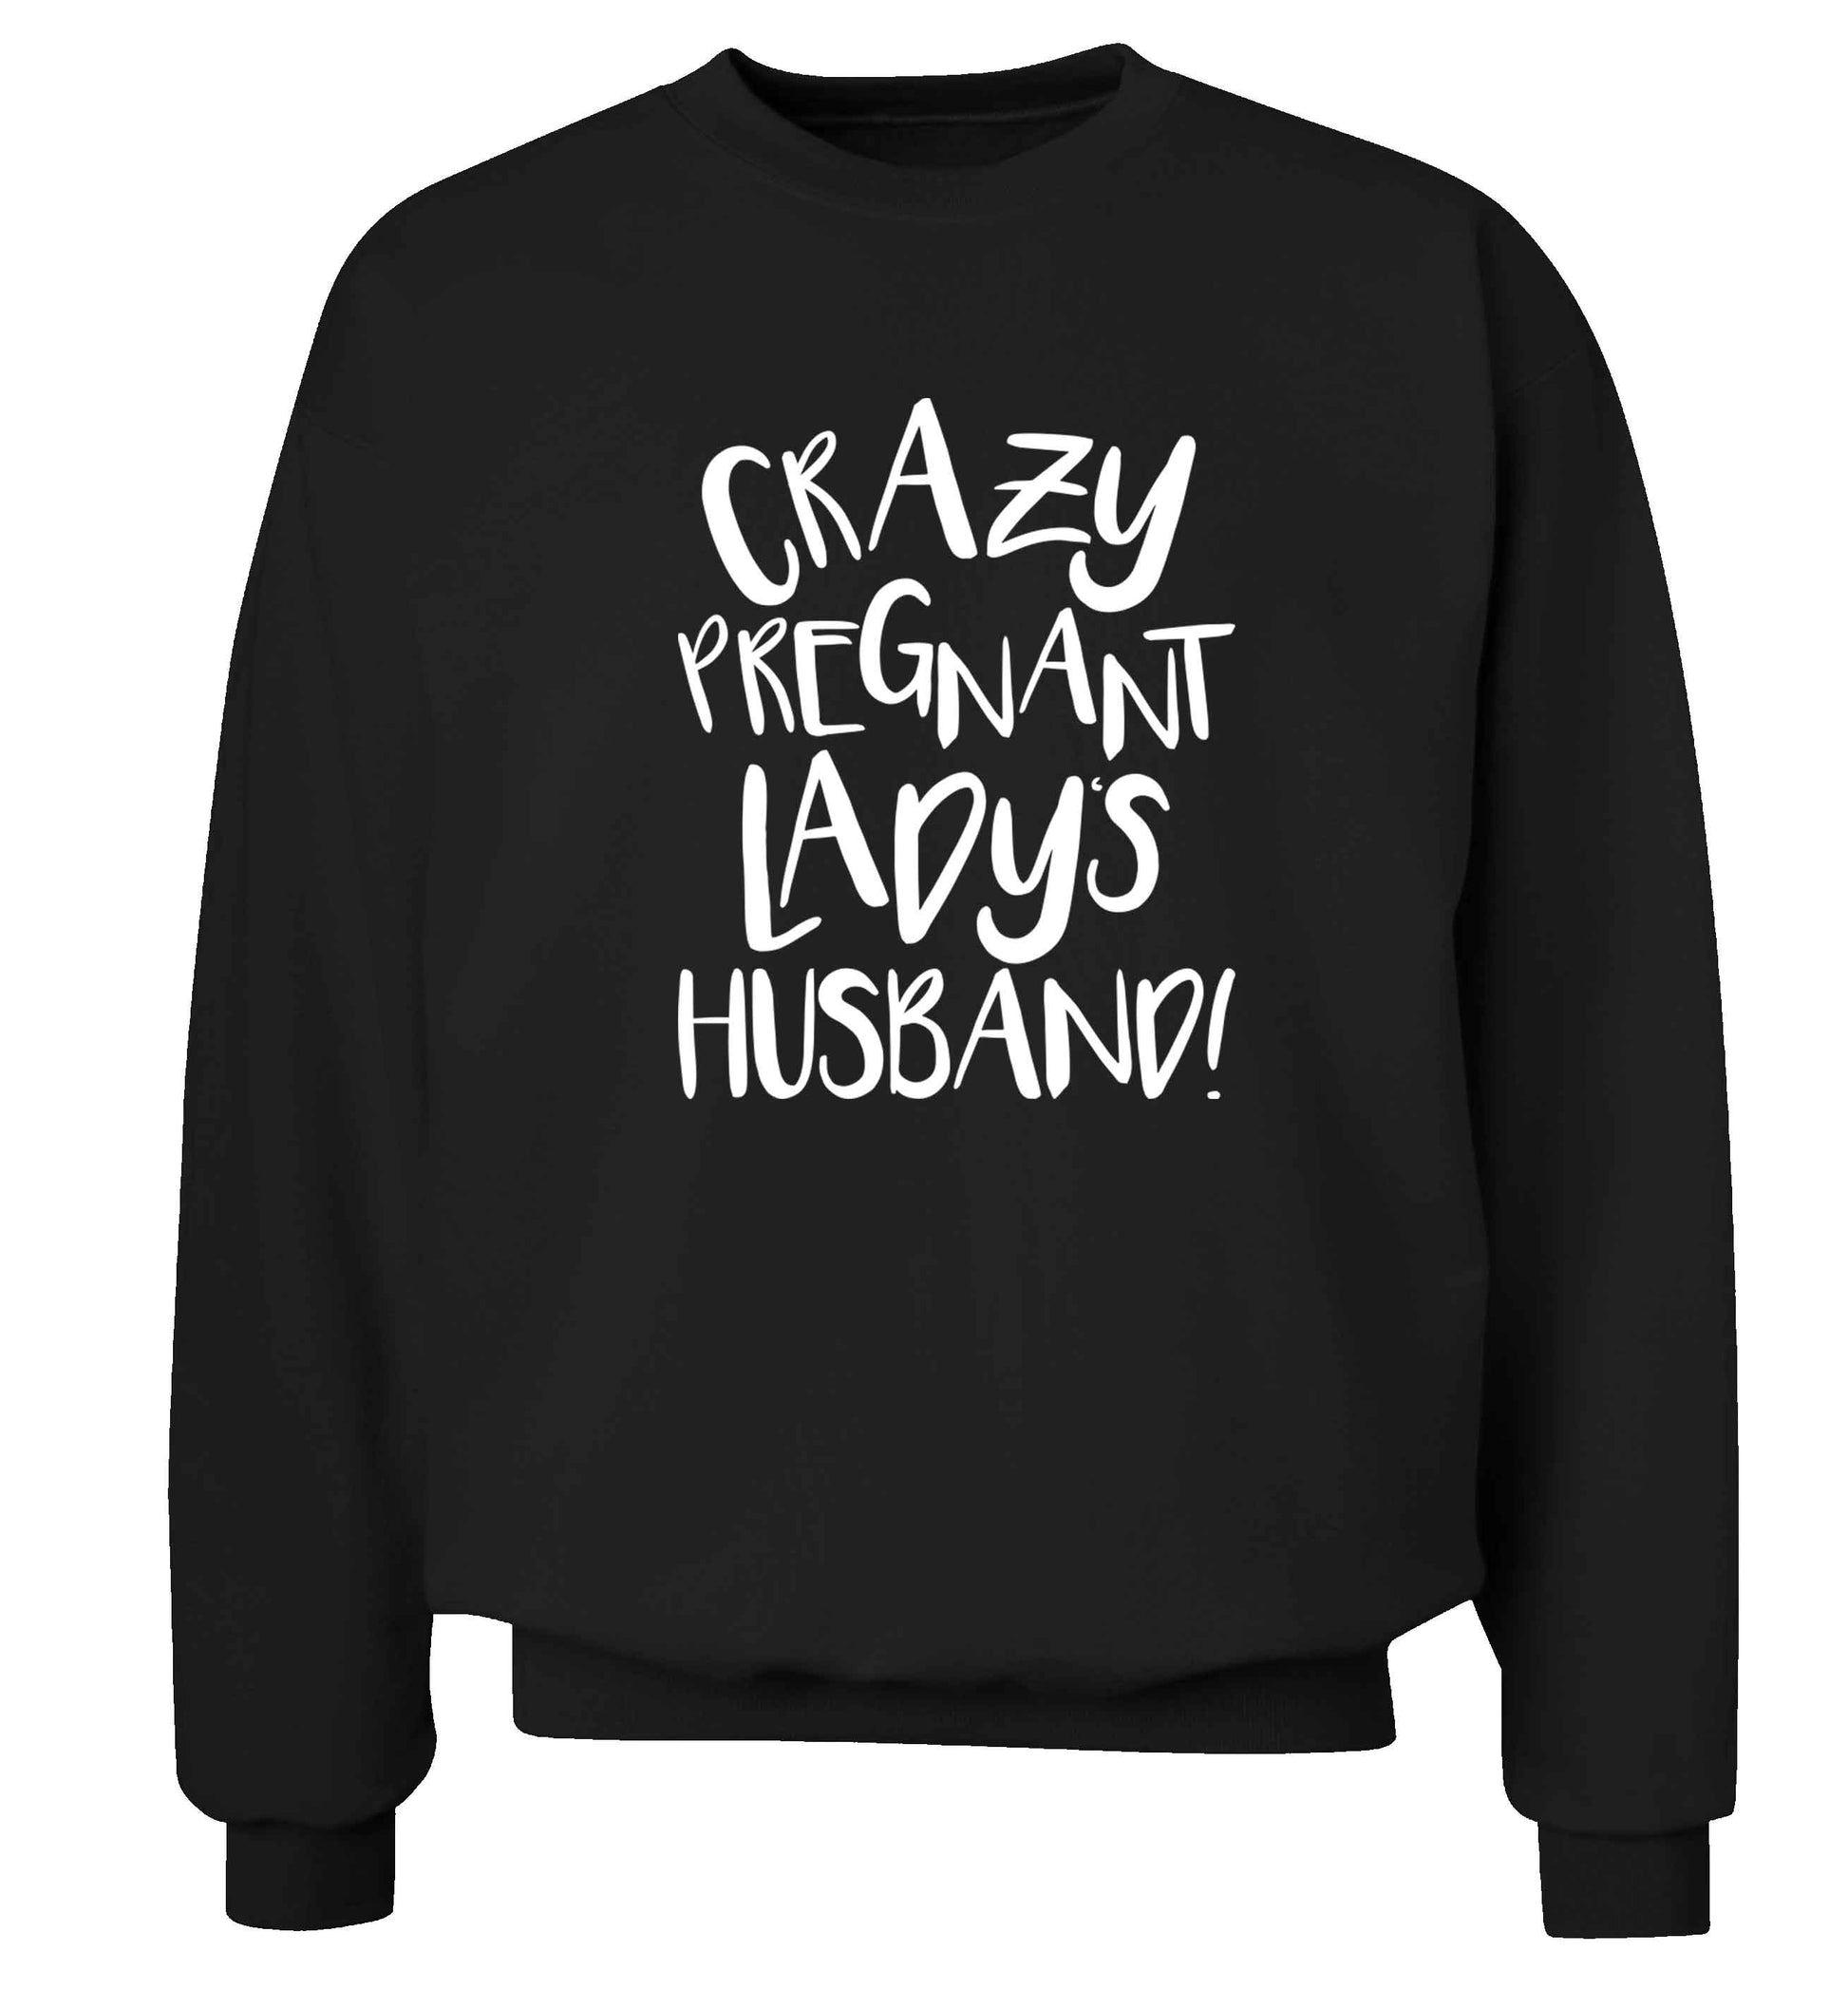 Crazy pregnant lady's husband Adult's unisex black Sweater 2XL